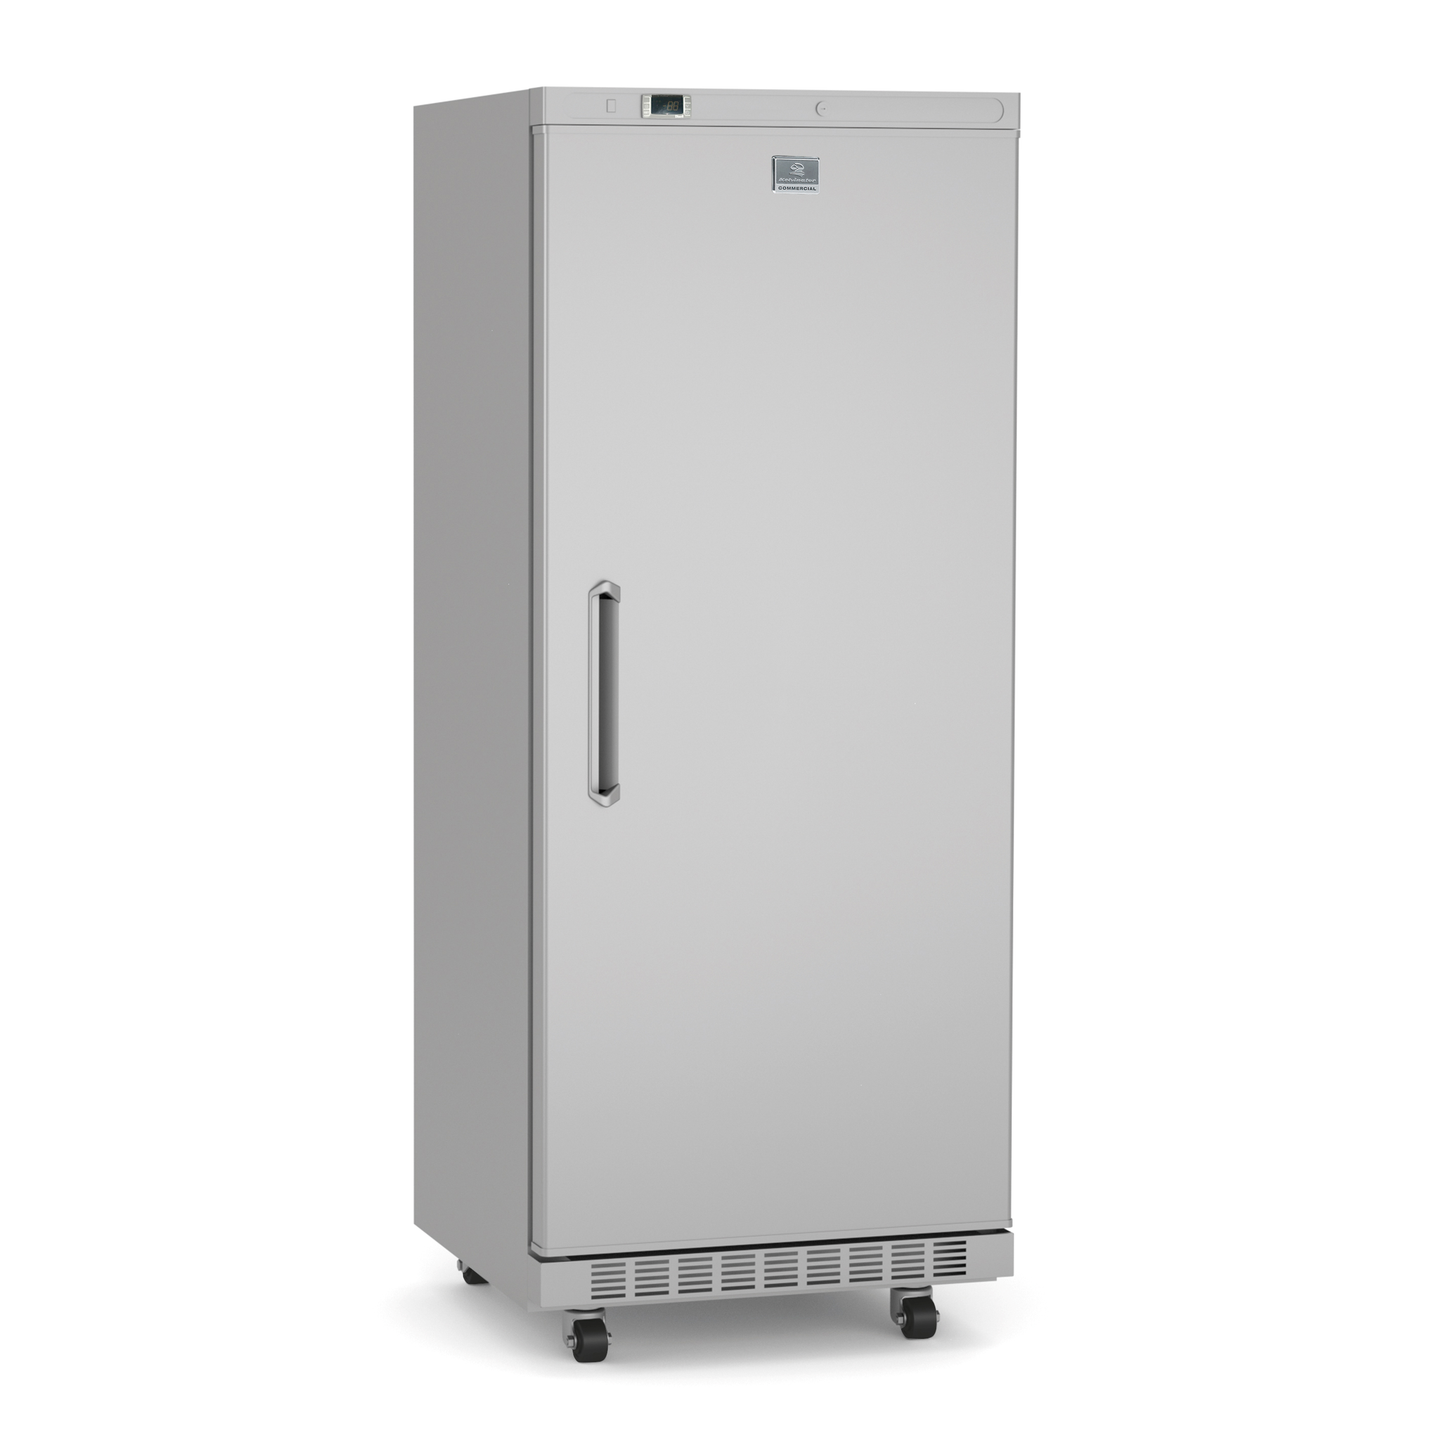 Reach-in Refrigerator Kelvinator Commercial Model KCHRI25R1DRE